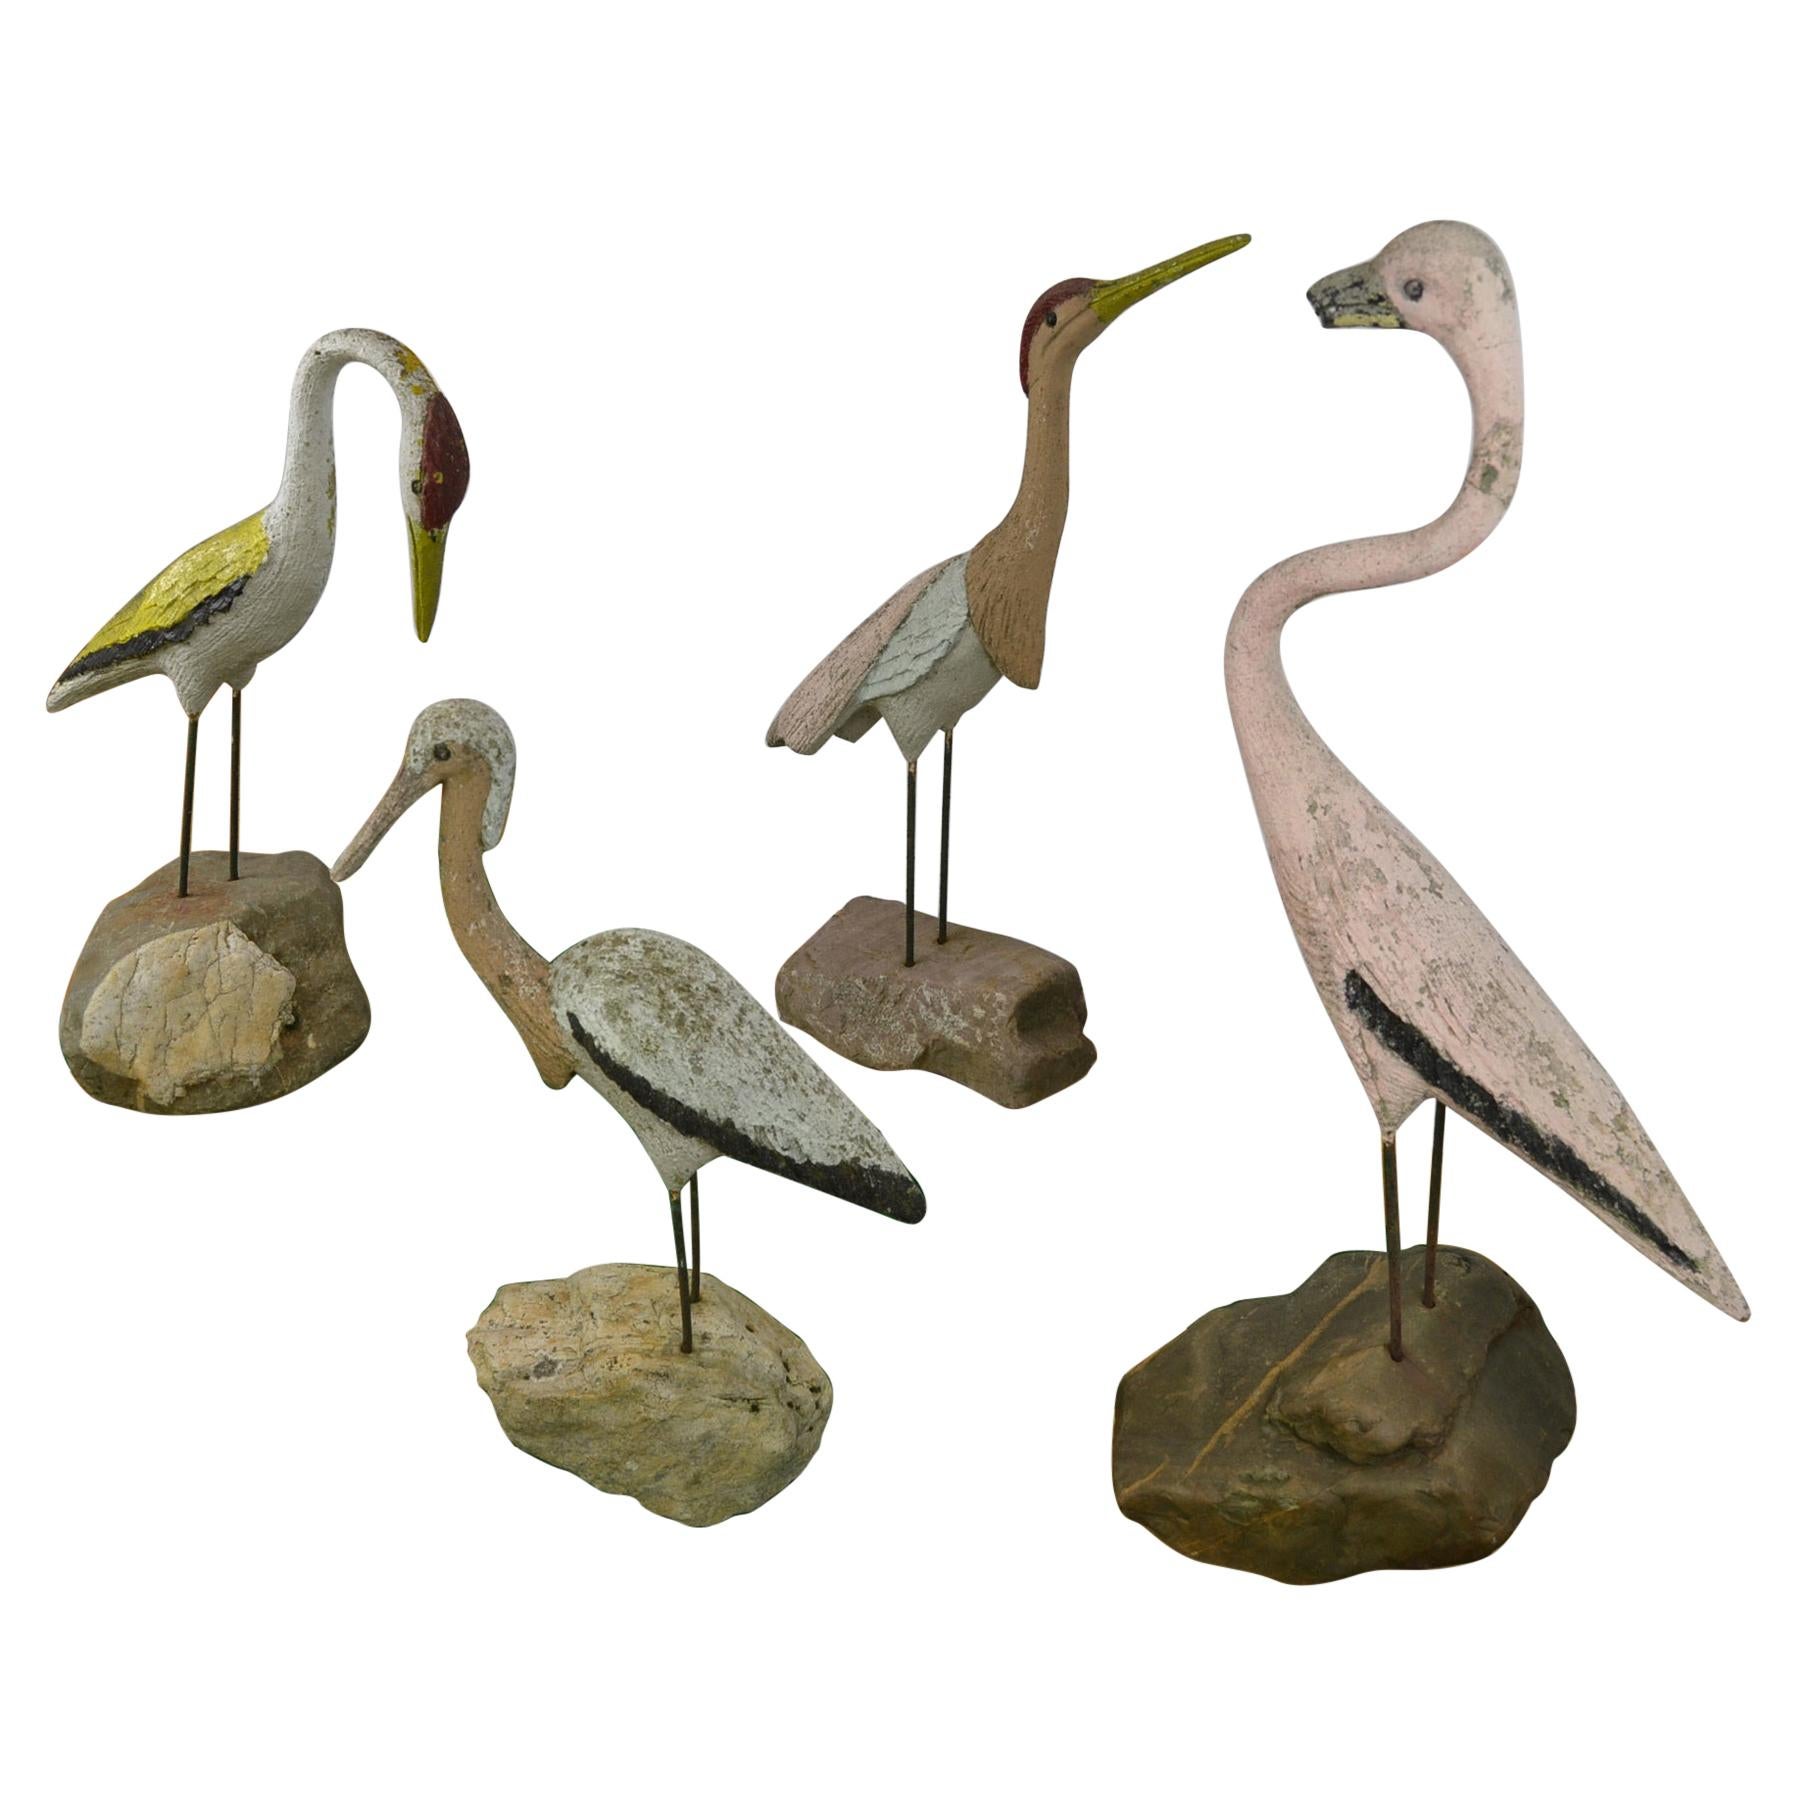 Vintage Concrete Bird Sculptures, 4 pieces of Garden Birds, France